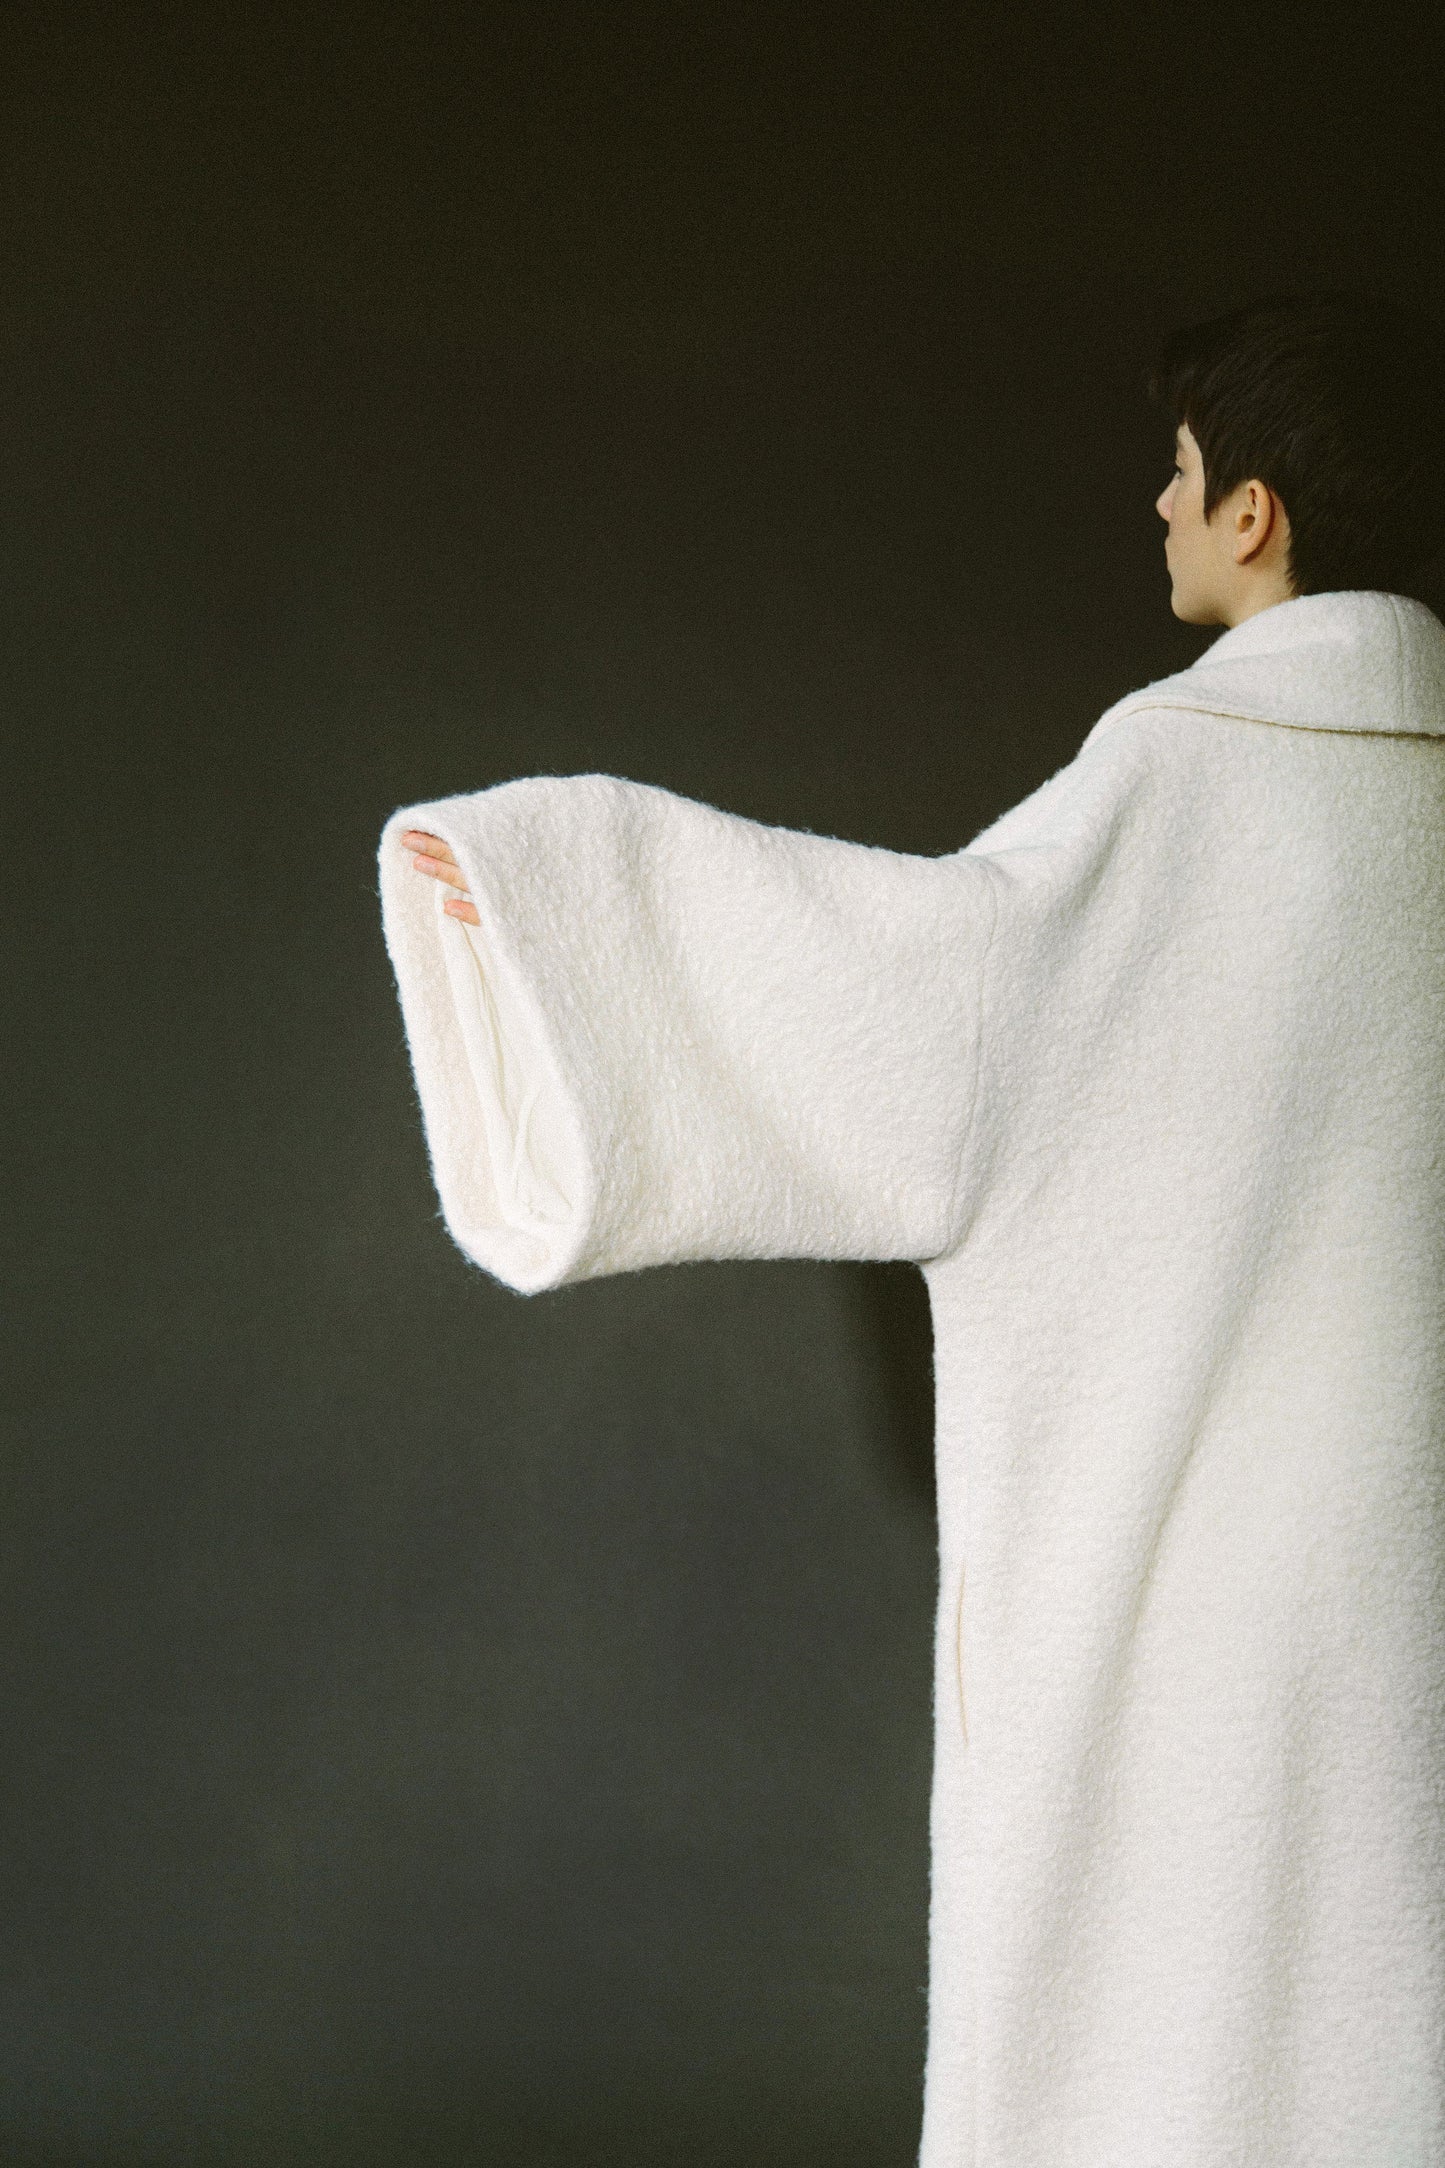 Cream Blanket Coat